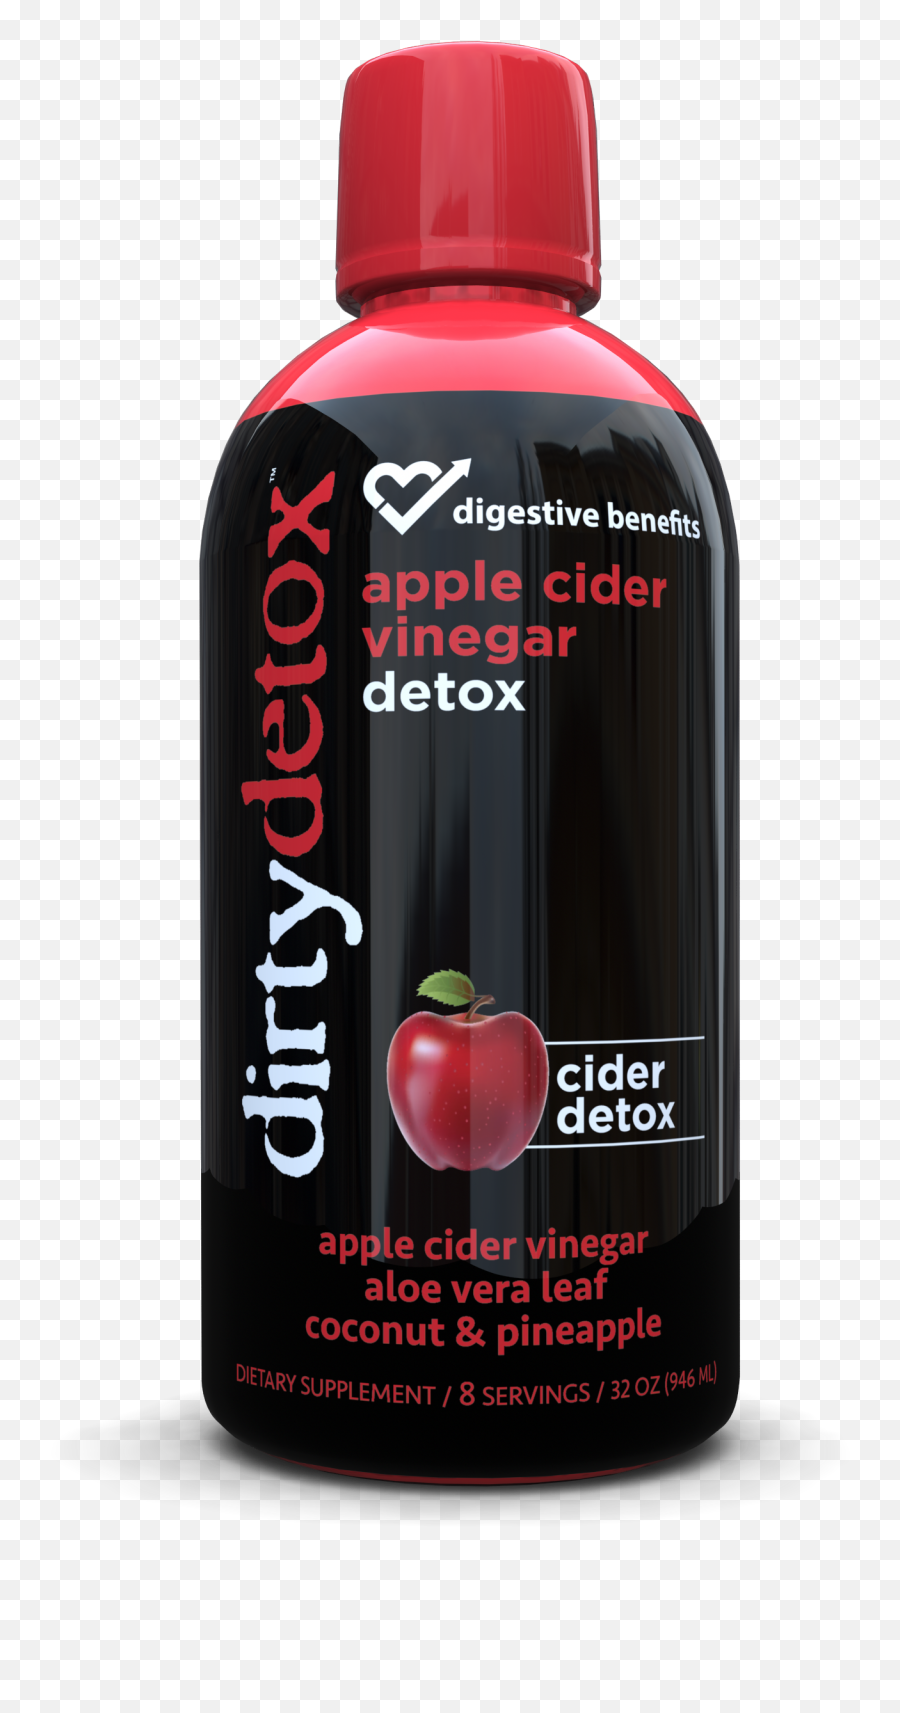 Digestive Benefits Dirty Detox Apple Cider Vinegar Detox U0026 Cleanse Dietary Supplement 32 Oz - Apple Emoji,Ridin Dirty Emoji Copy And Paste